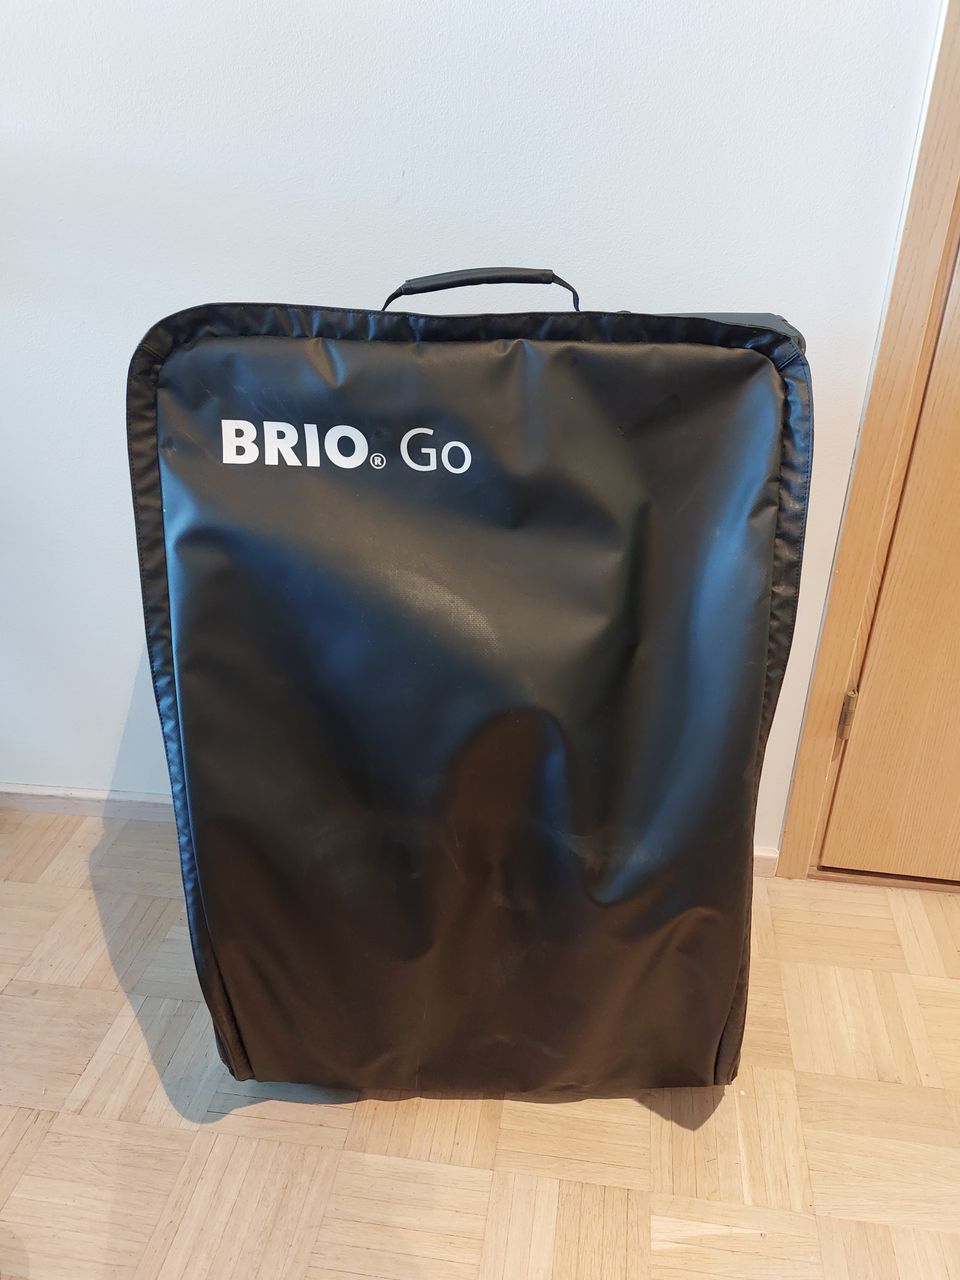 Brio / Britax Go rattaiden lentolaukku